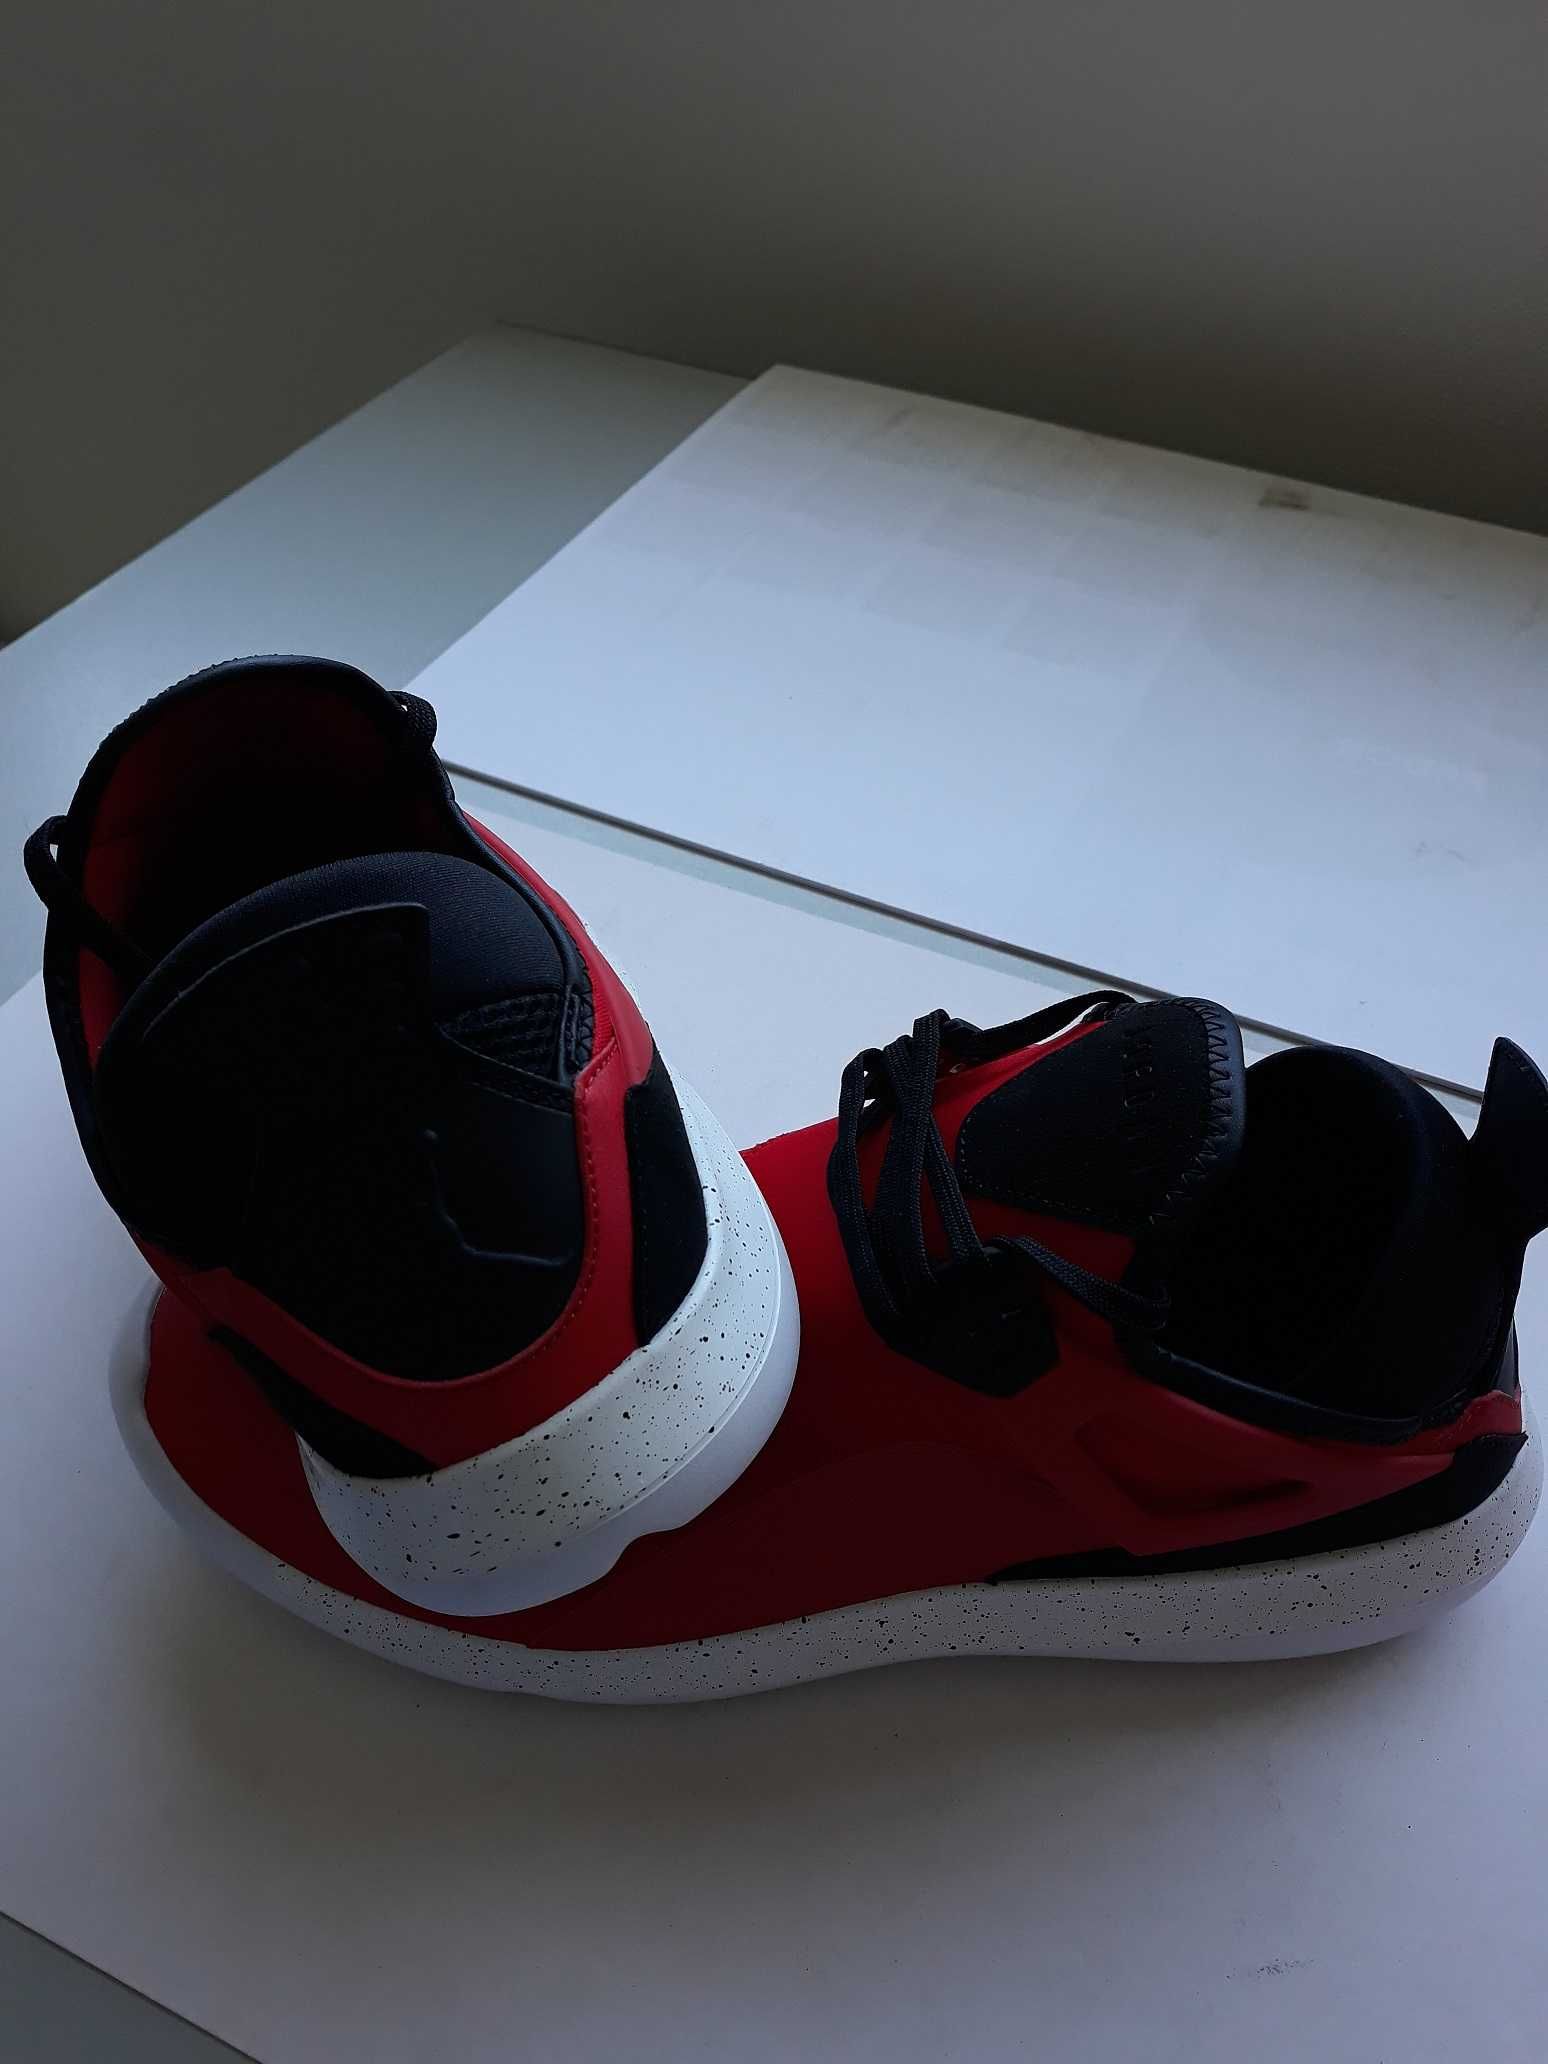 RARAS & EXCLUSIVAS »»» Nike Jordan Fly´89 - NOVAS para n.º 46